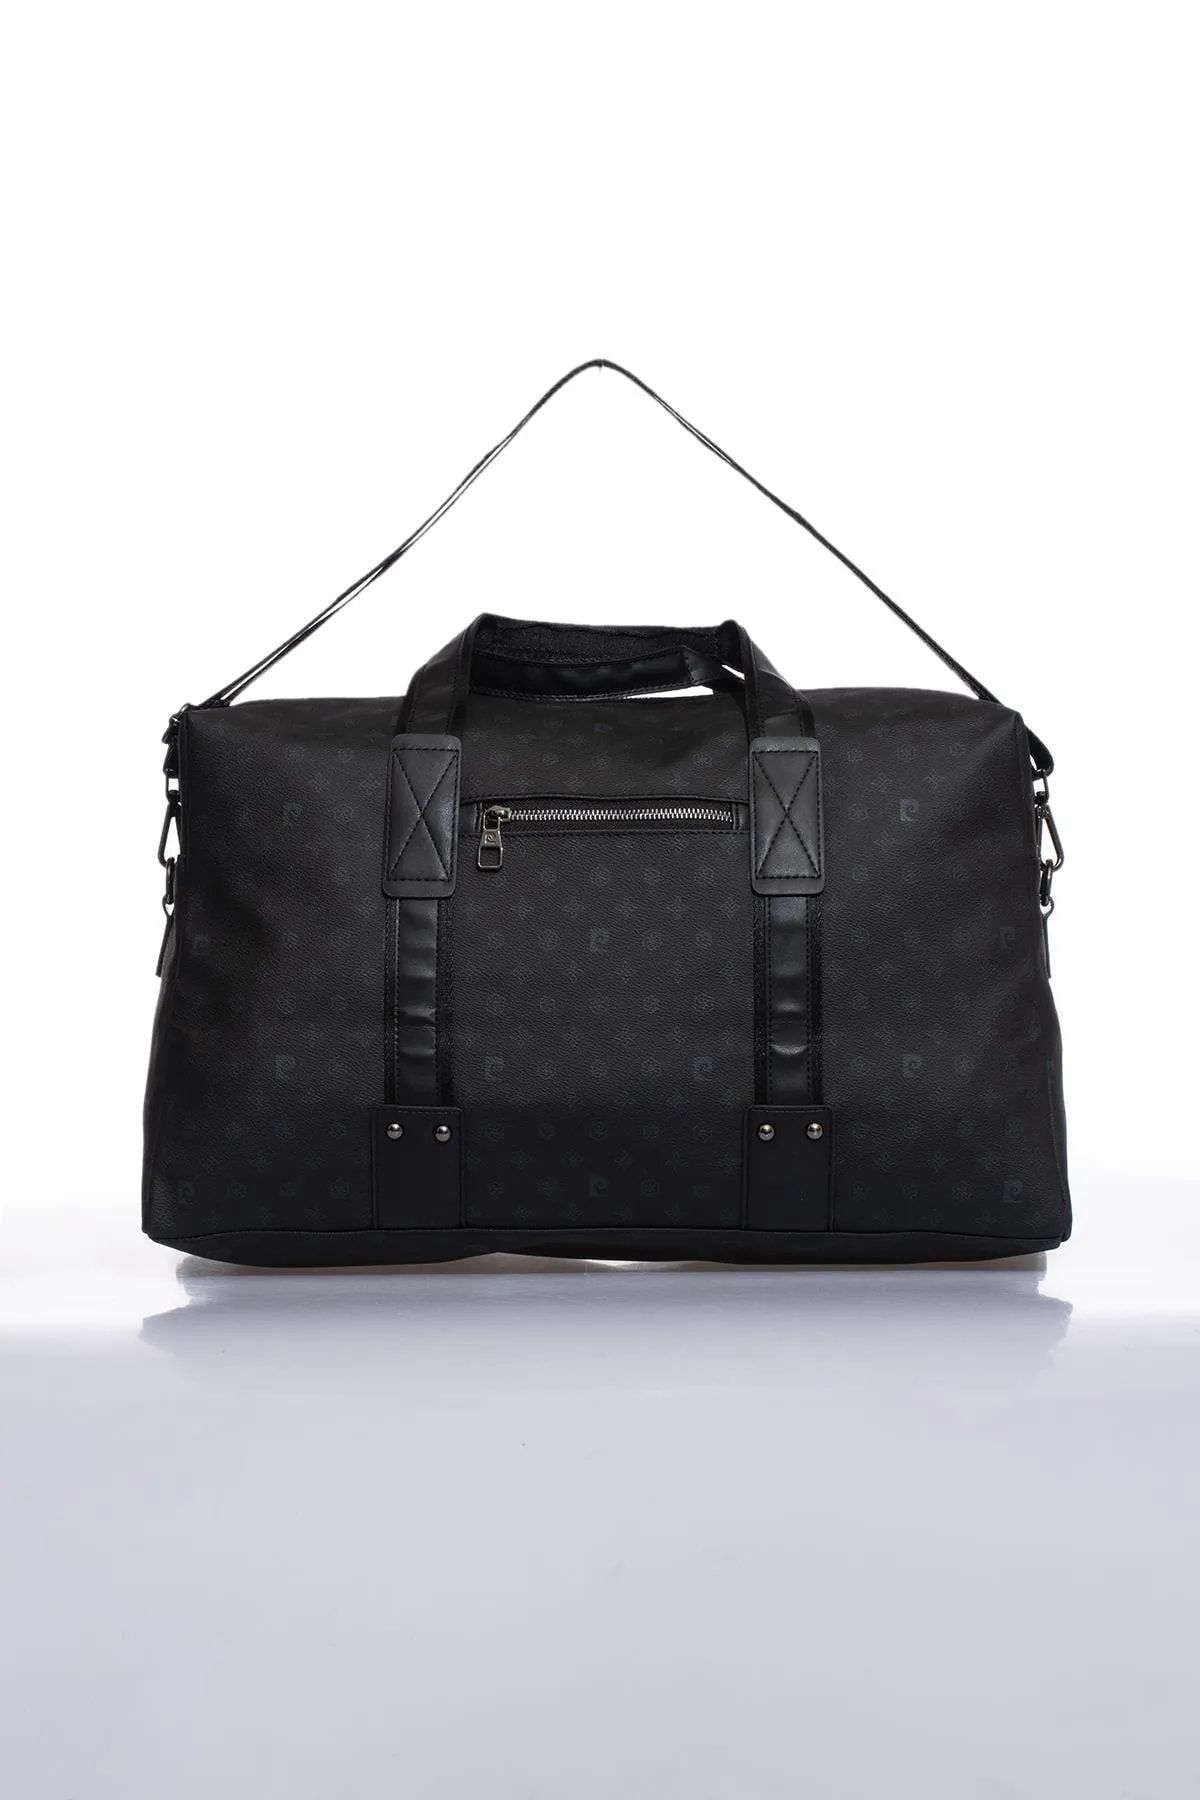 Pierre Cardin چمدان دستی یونیسکس و کیف ورزشی مشکی PC1205